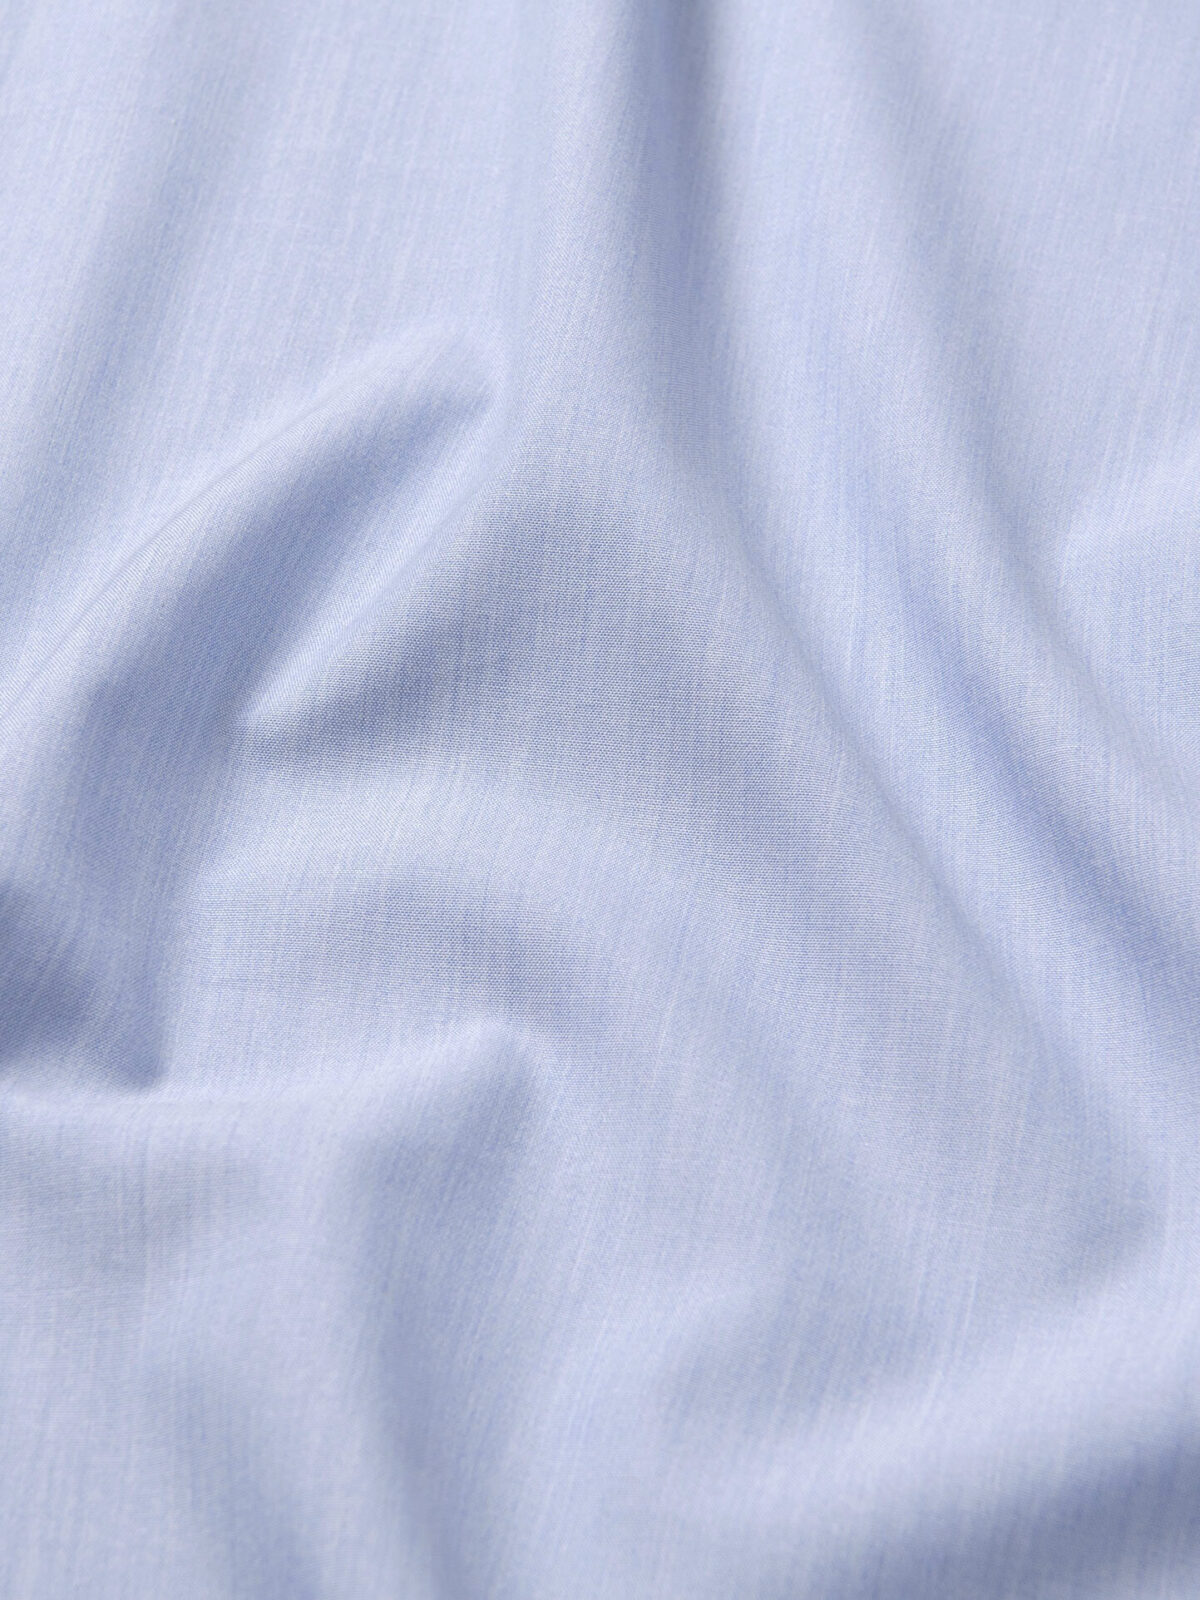 Bleu direct 78 Bleu ciel G 250% cas: 2503-73-3 coton teinture